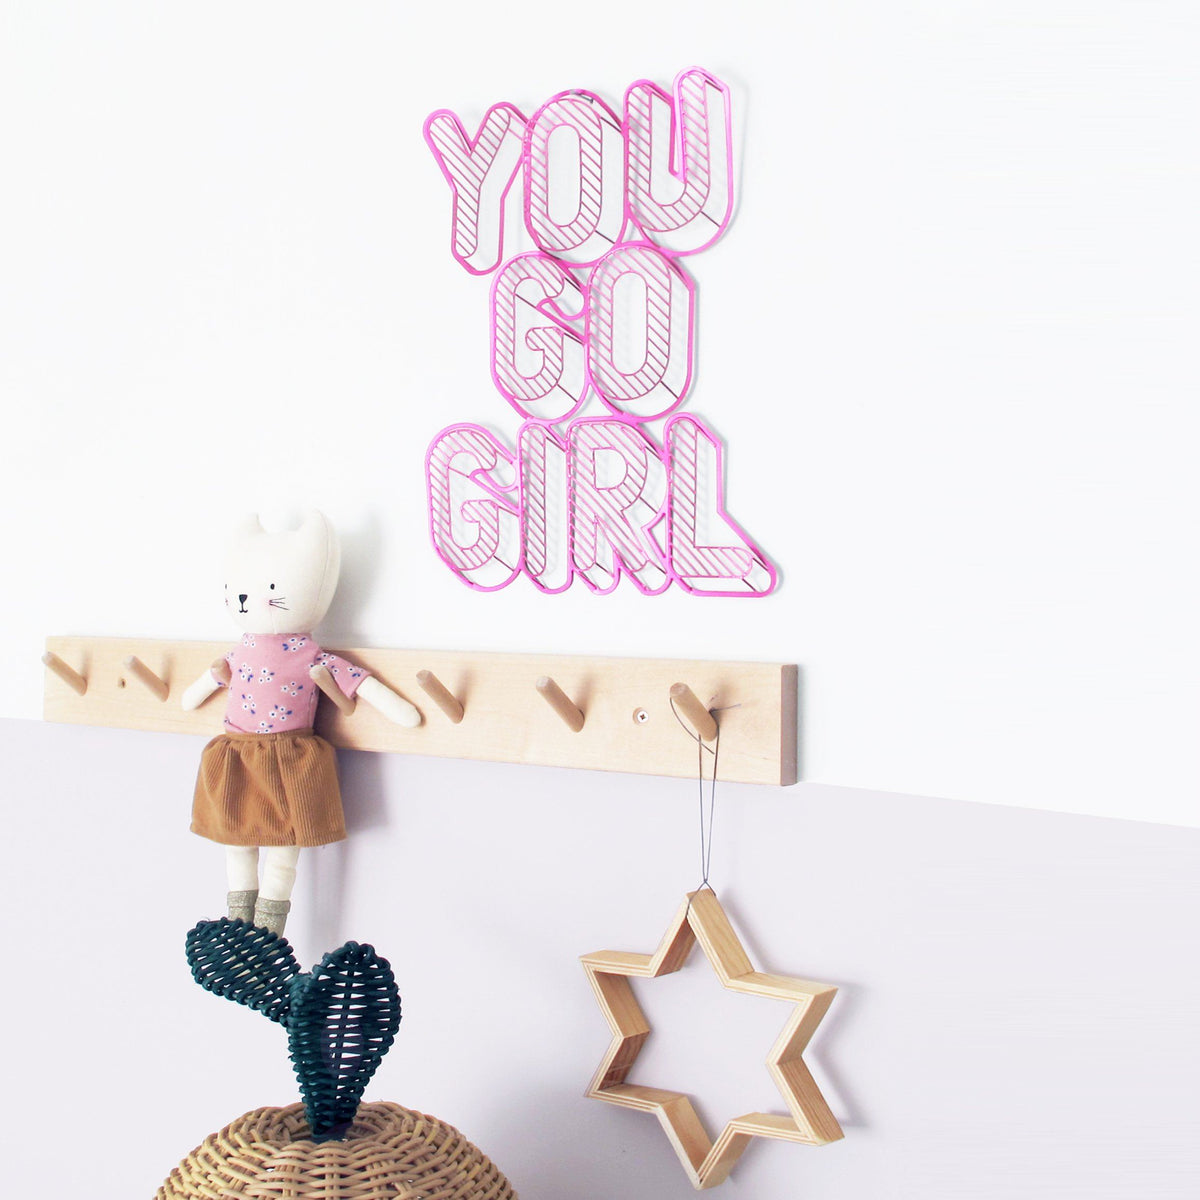 YOU GO GIRL Inspirational Phrase to hang on the wall | Wall Decor ShapeMixer 